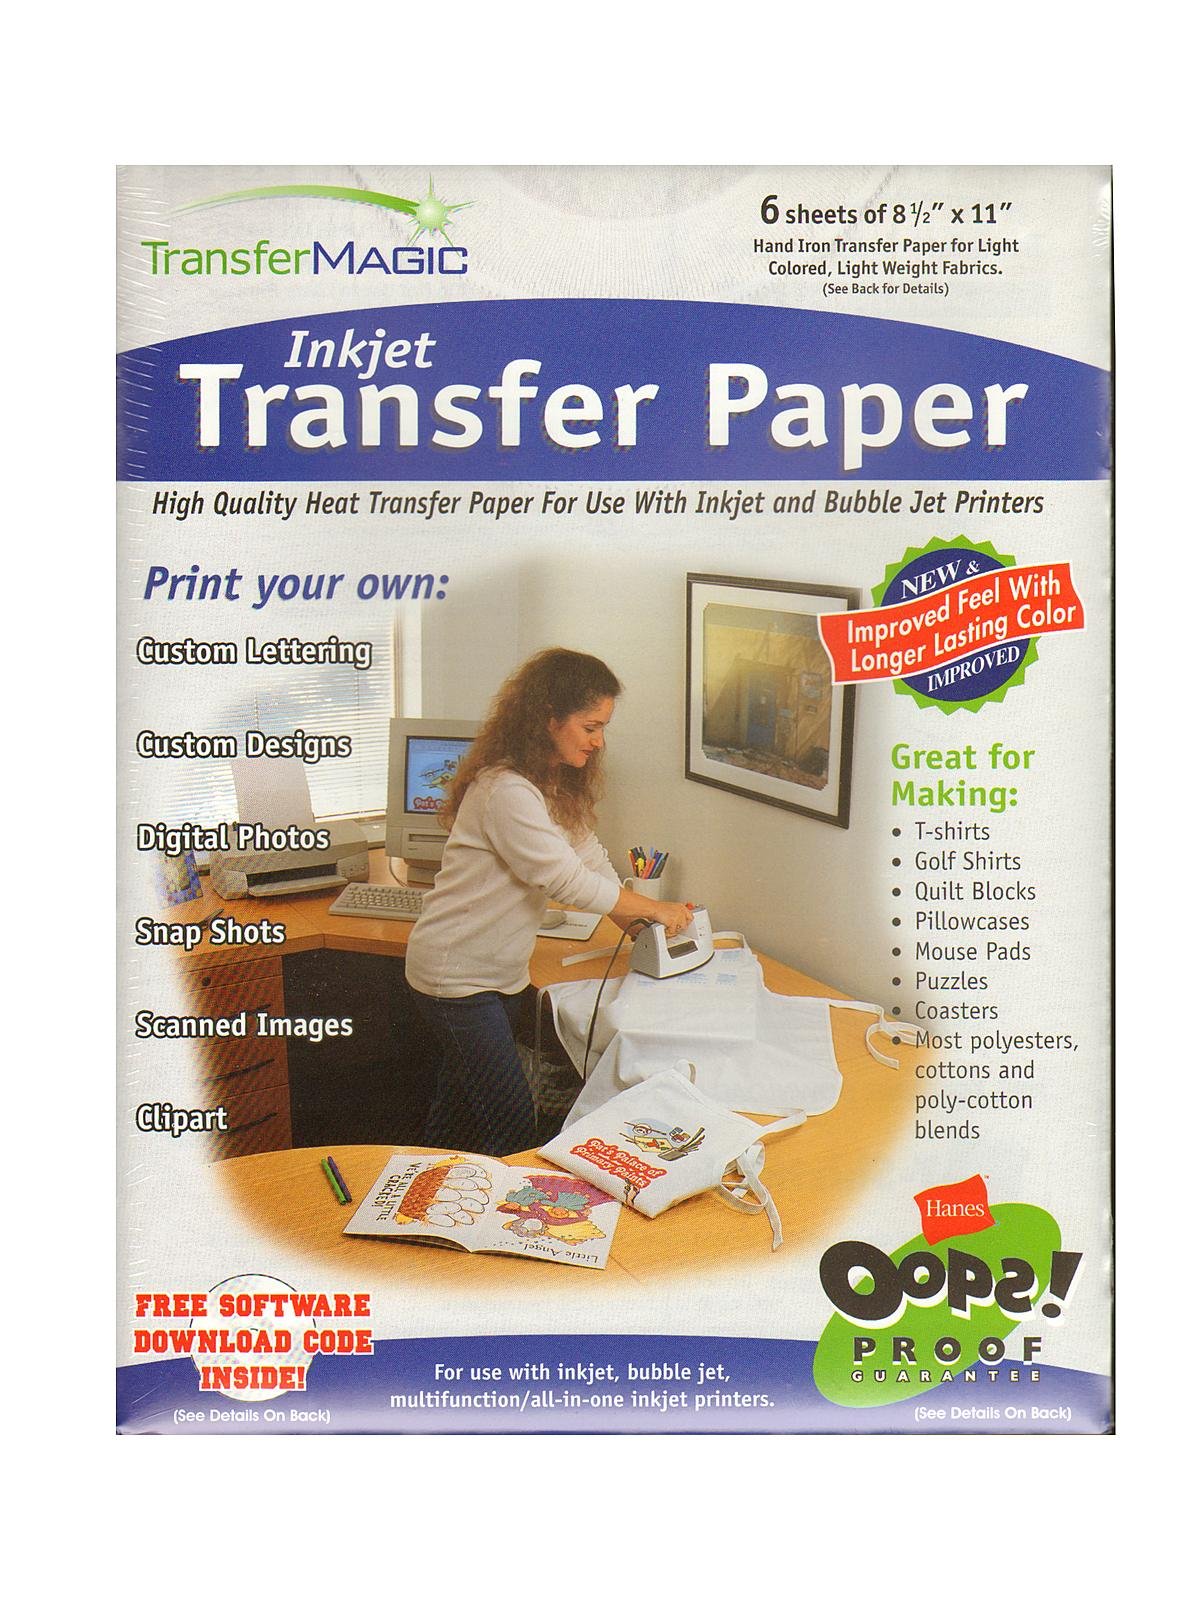 Transfer Magic - Inkjet Transfer Paper